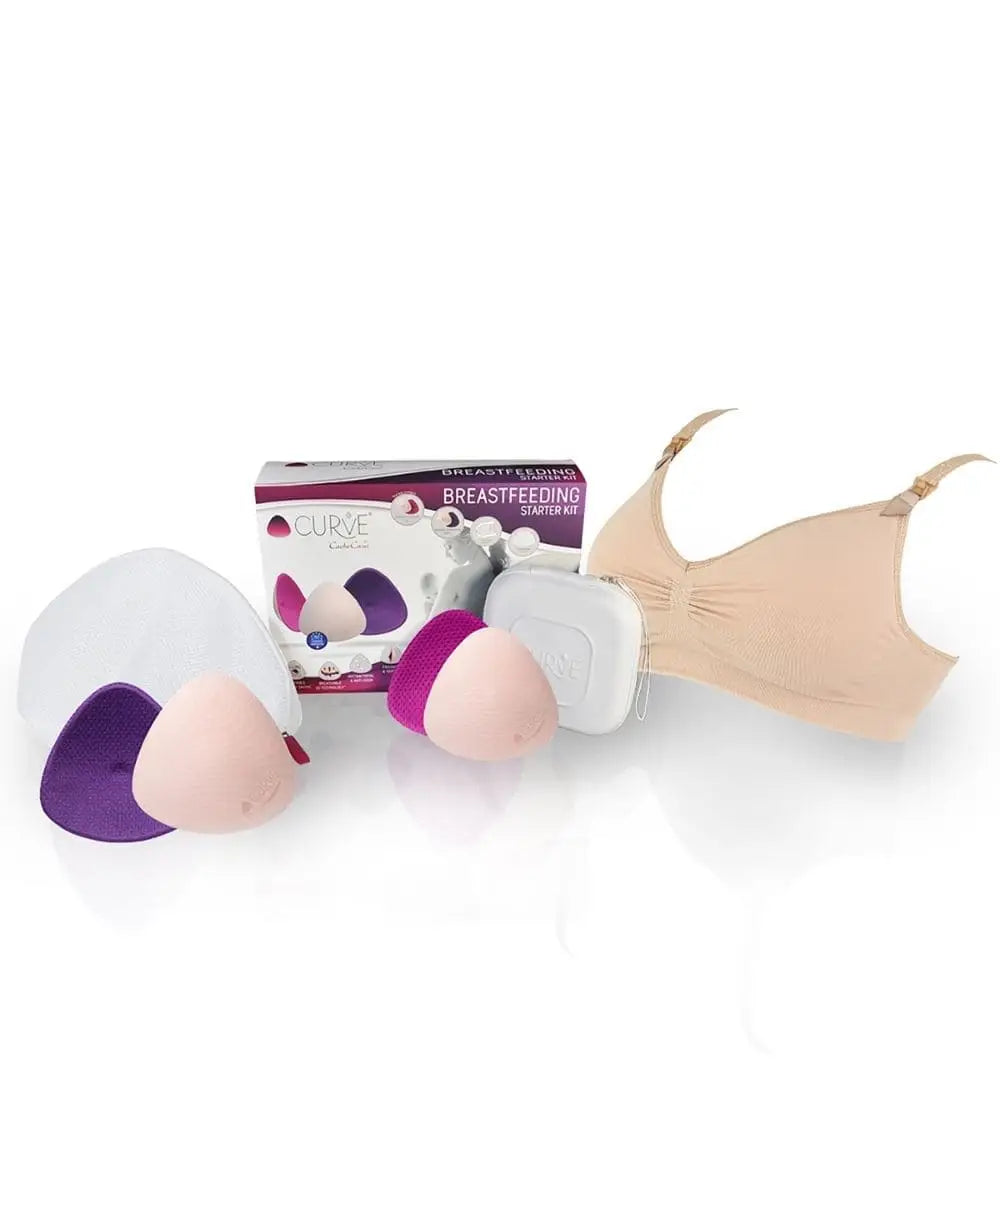 Curve Breastfeeding starter kit | Nude bra - Pads